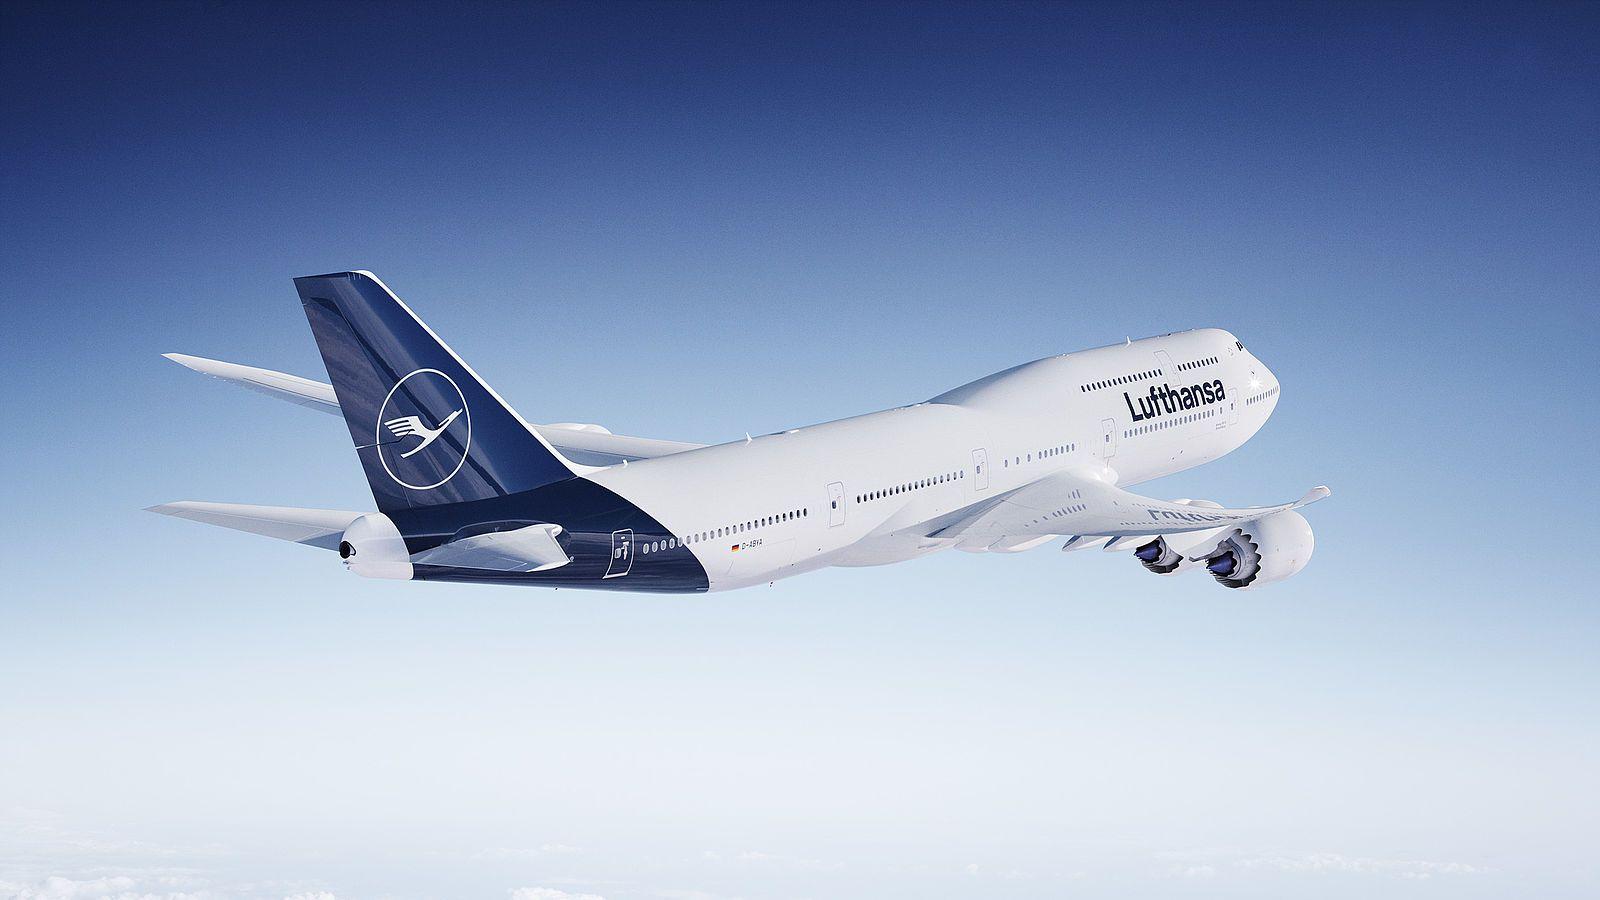 Lufthansa Group: Company